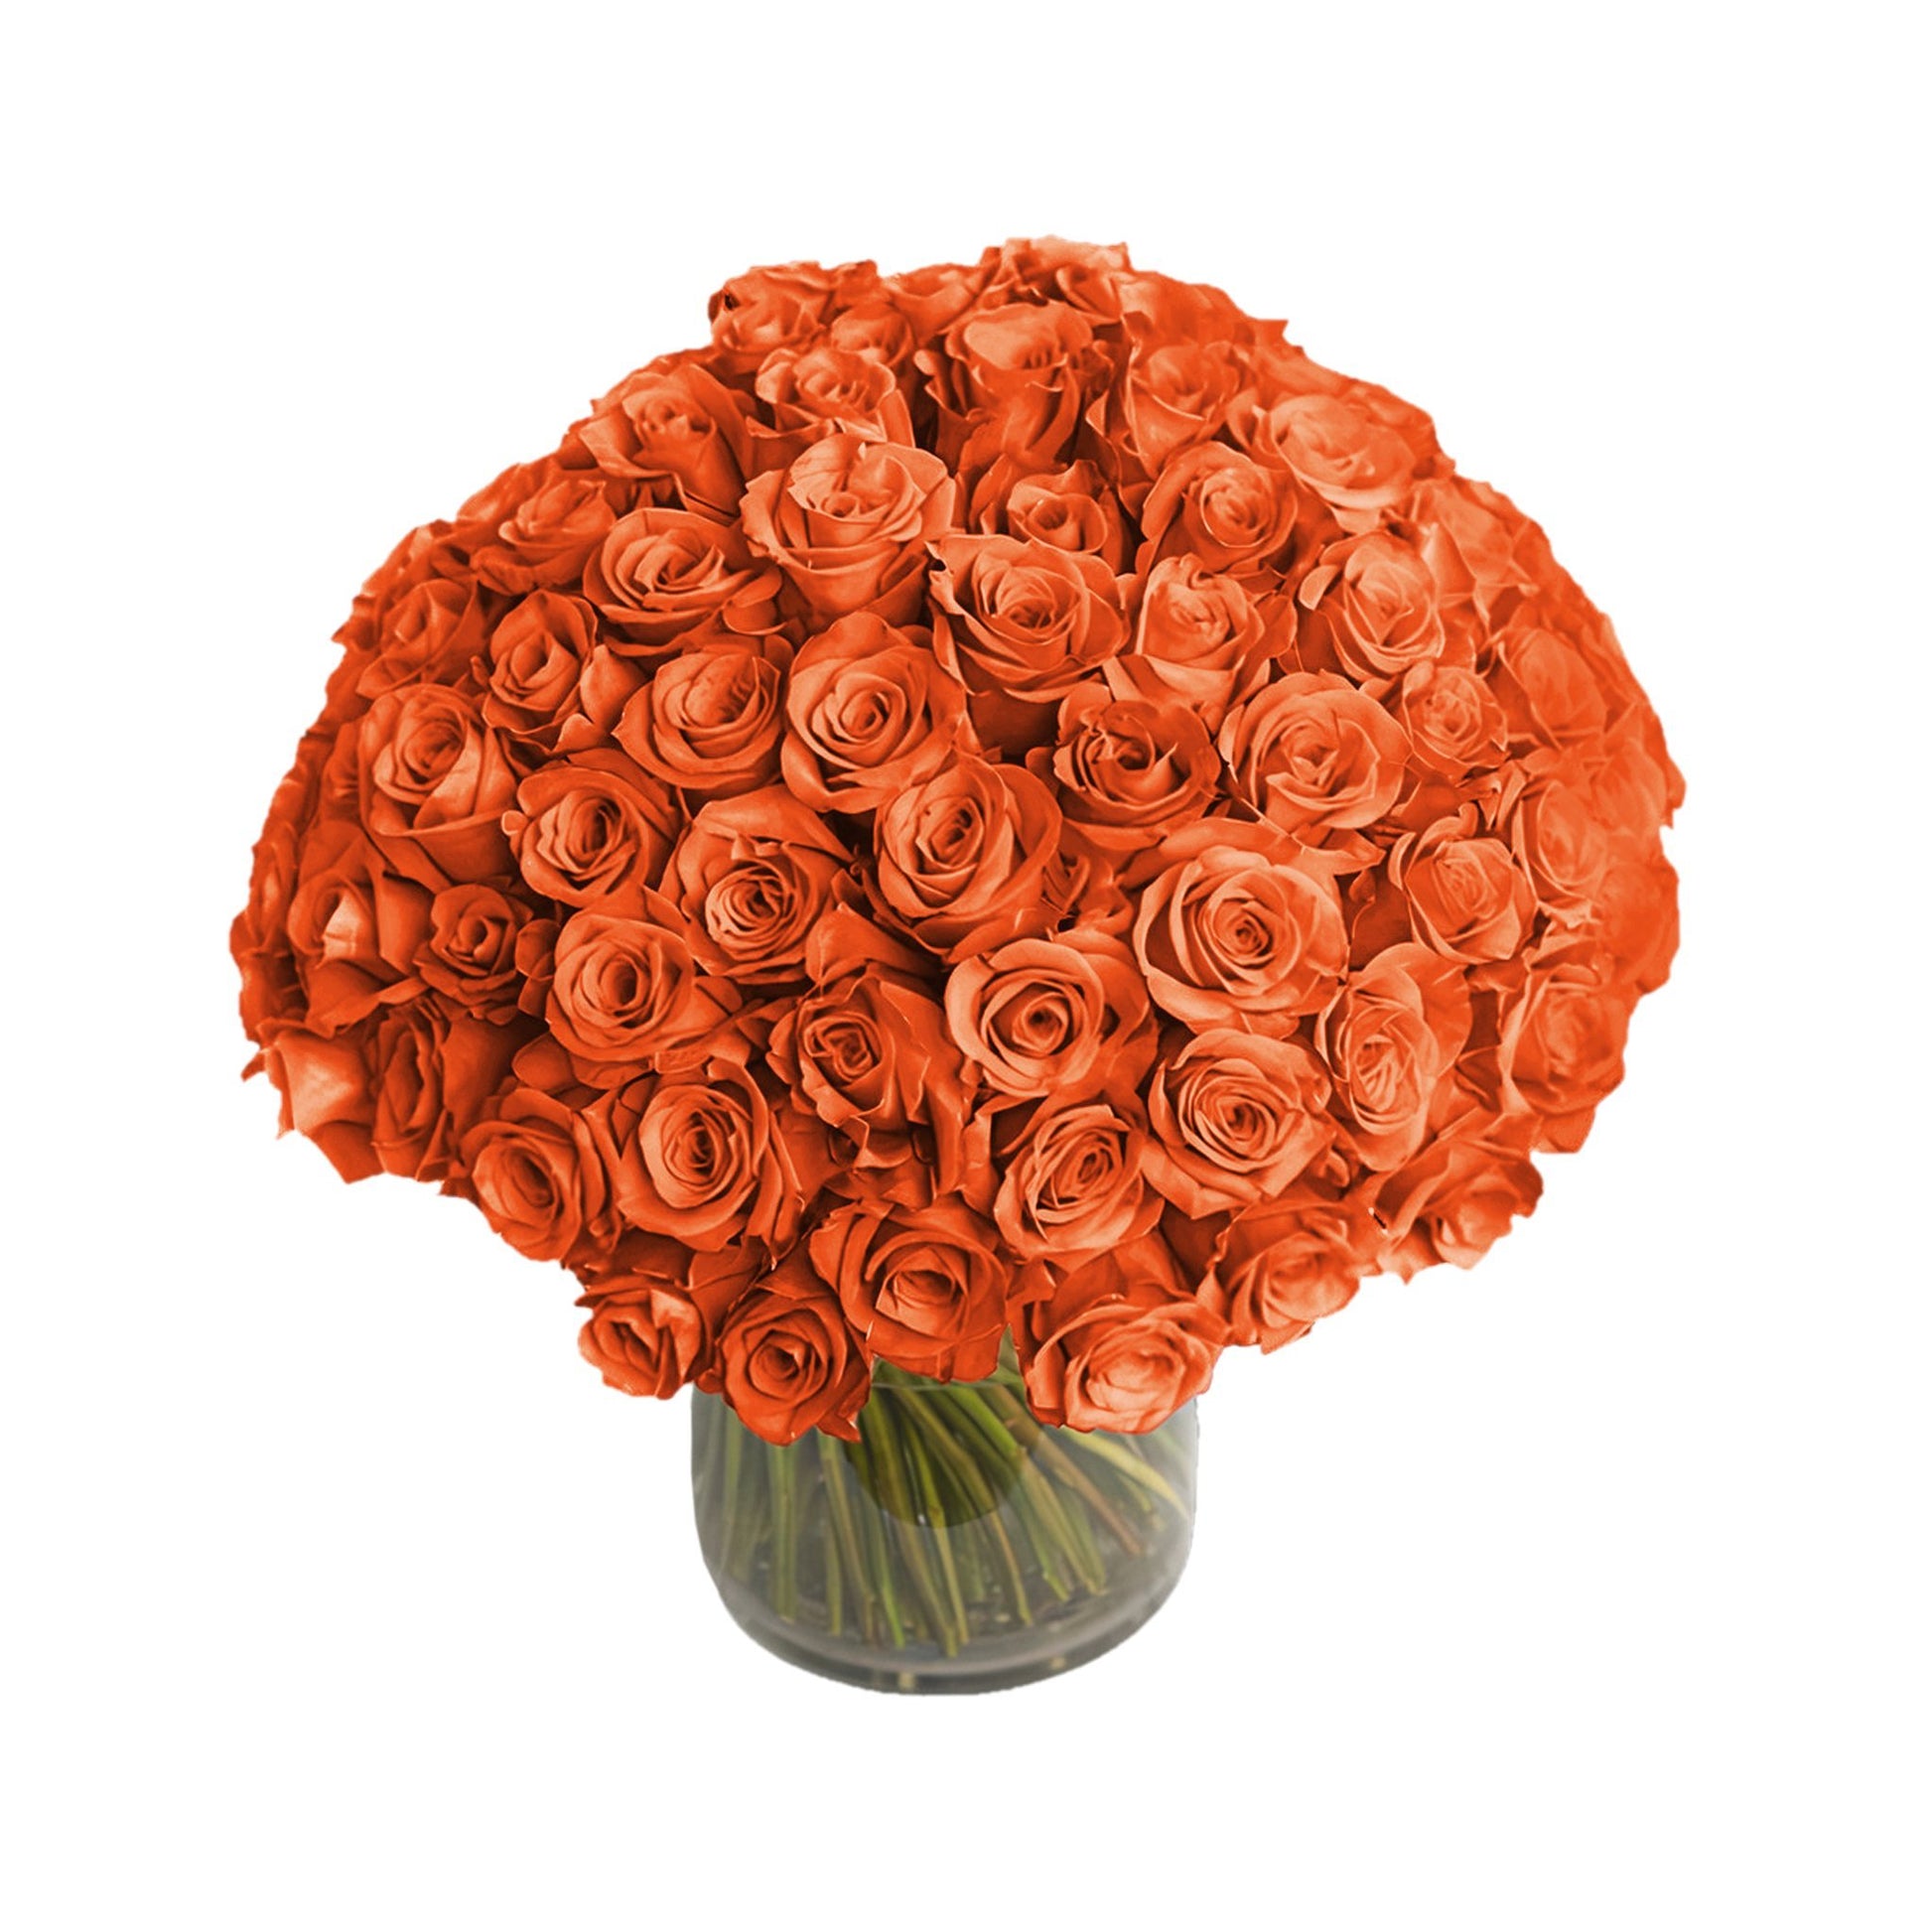 NYC Flower Delivery - Fresh Roses in a Vase | 100 Orange Roses - Roses